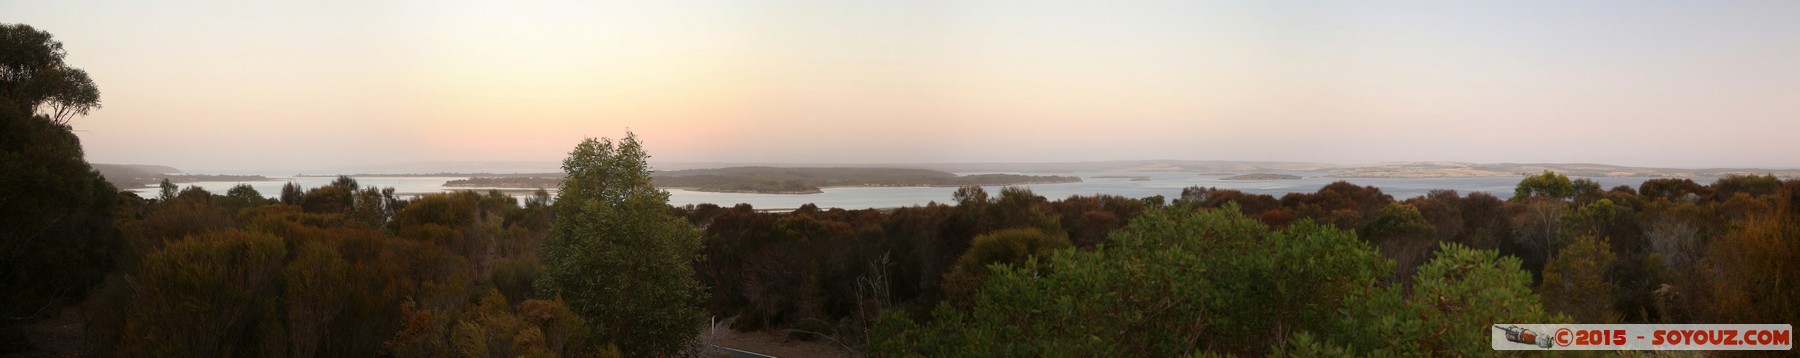 Kangaroo Island - Pelican Lagoon panorama - Dusk time
Stitched Panorama
Mots-clés: AUS Australie Ballast Head geo:lat=-35.80664411 geo:lon=137.74123844 geotagged Muston South Australia Kangaroo Island Pelican Lagoon panorama sunset